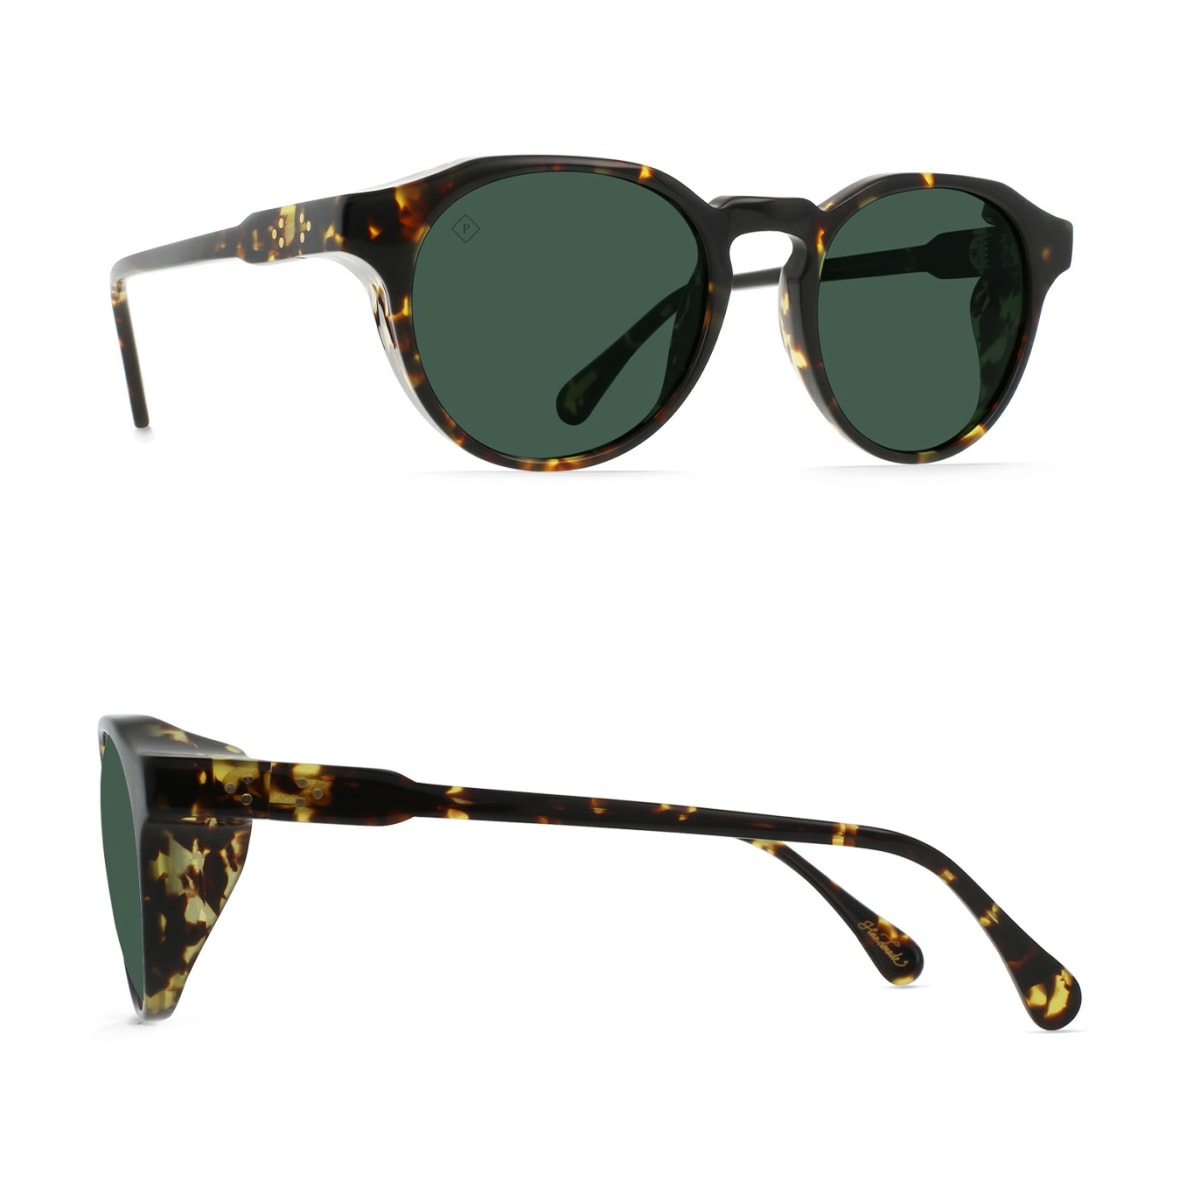 Buy Raen Wiley Rectangular Sunglasses, Matte Rootbeer, 54 mm at Amazon.in